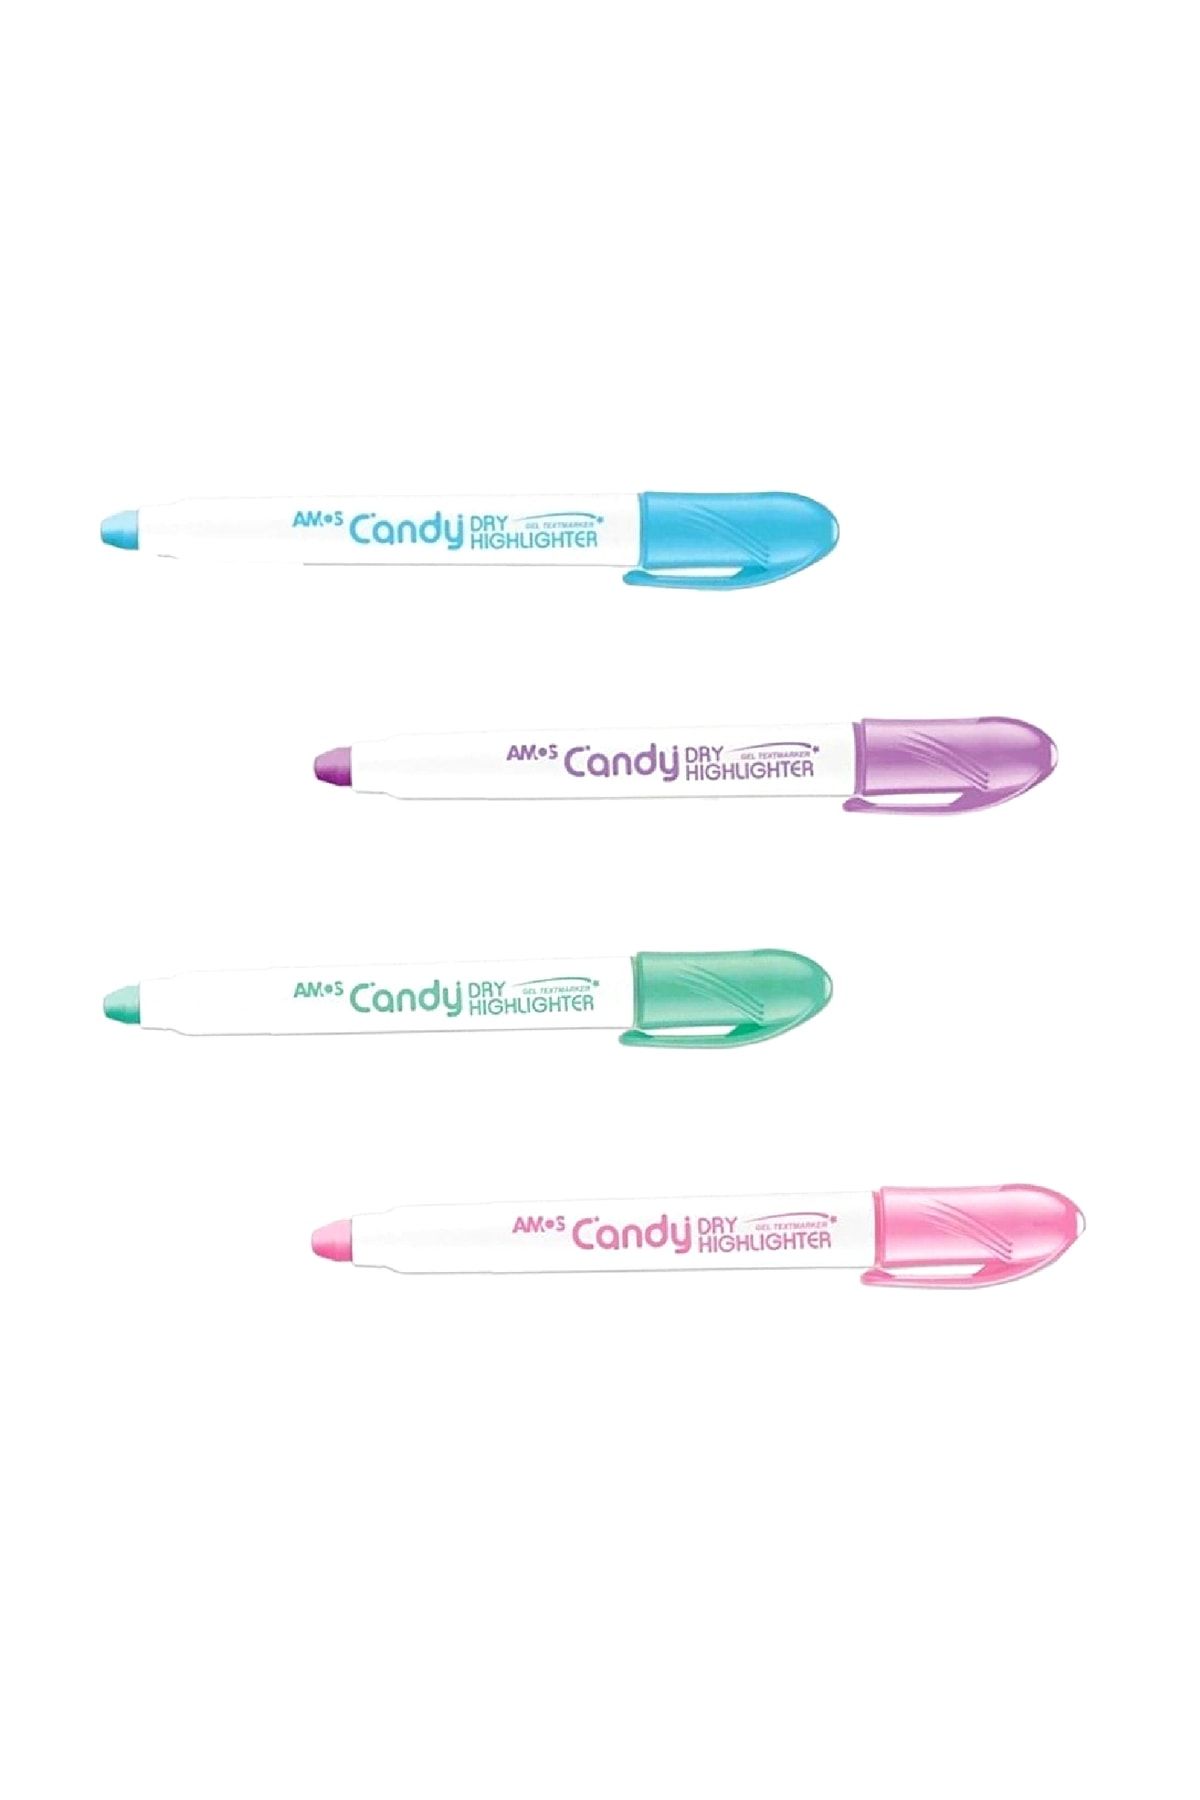 Amos 4 Yeni Pastel Renk Fosforlu Kalem Seti Candy Highlighter Jel Dry -Candy